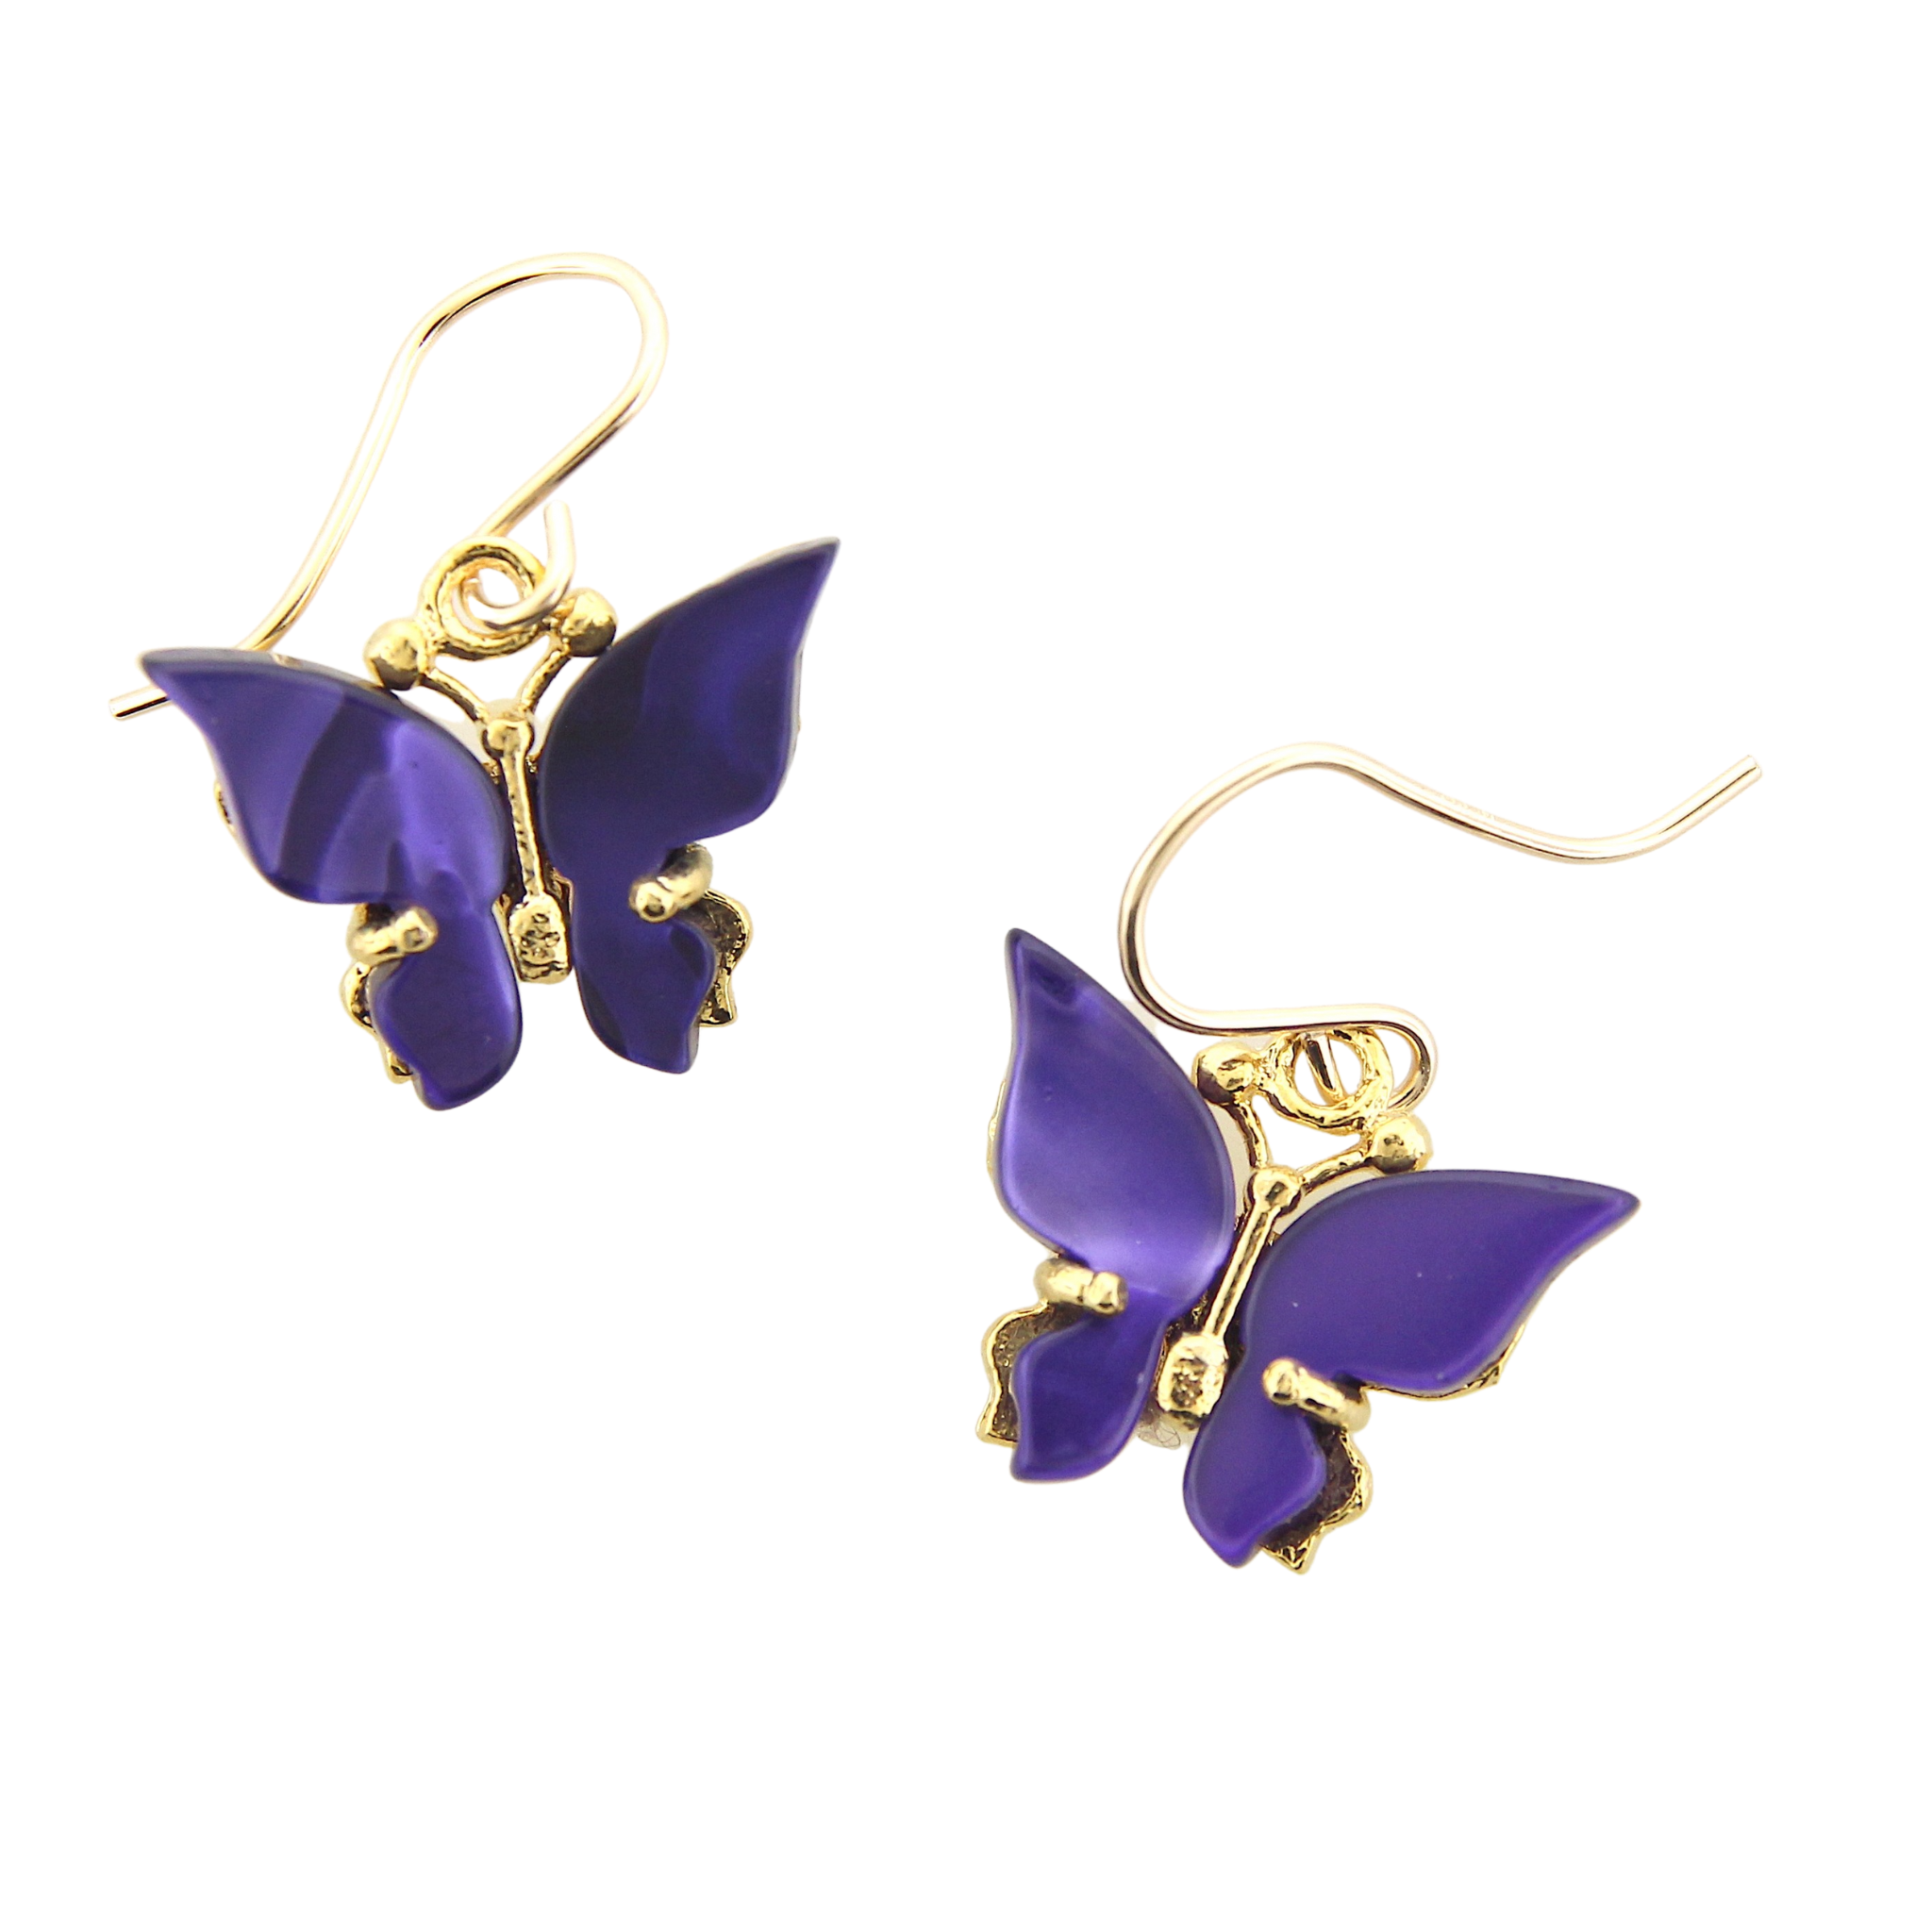 Purple Butterfly Huggies Earrings Gold or Silver Plated on 925 Sterling  Silver CZ Flower Earring Mini Hoops Pierced Gift for Her Mom Girl - Etsy | Purple  earrings, Delicate earrings, Earrings